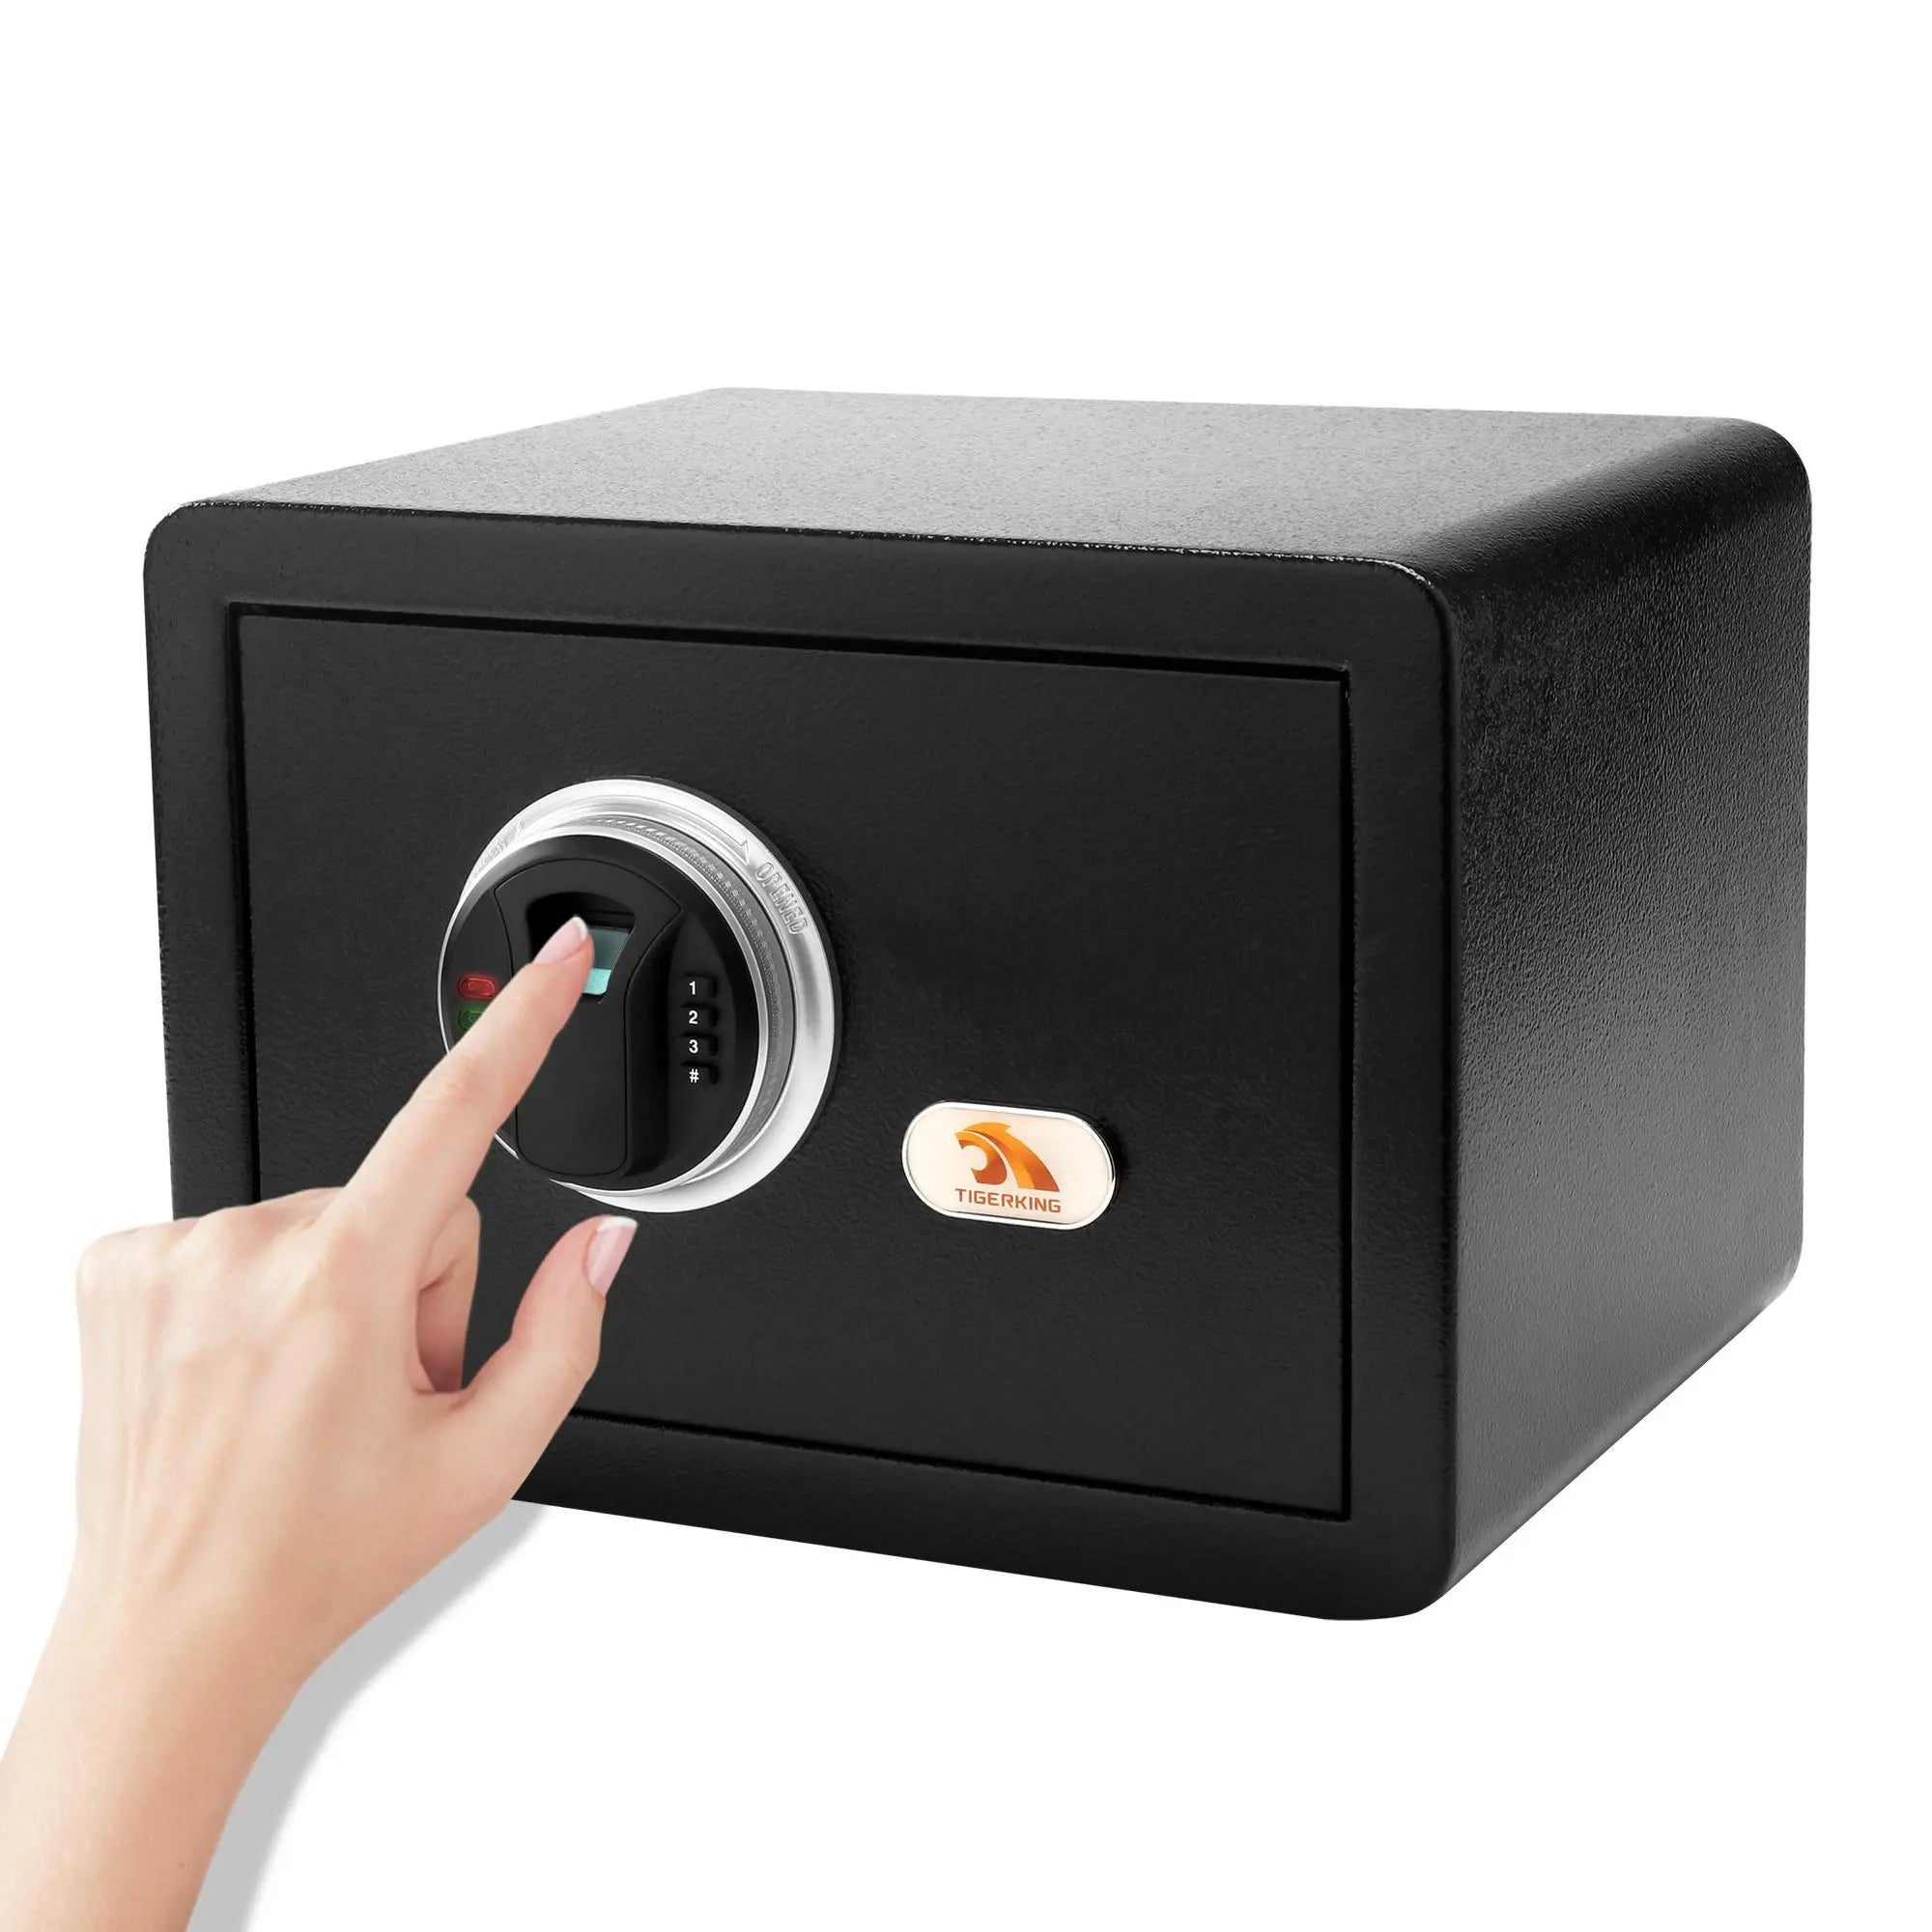 TIGERKING Small Closet Safe With Fingerprint - E25FED(B) TIGERKING SAFE